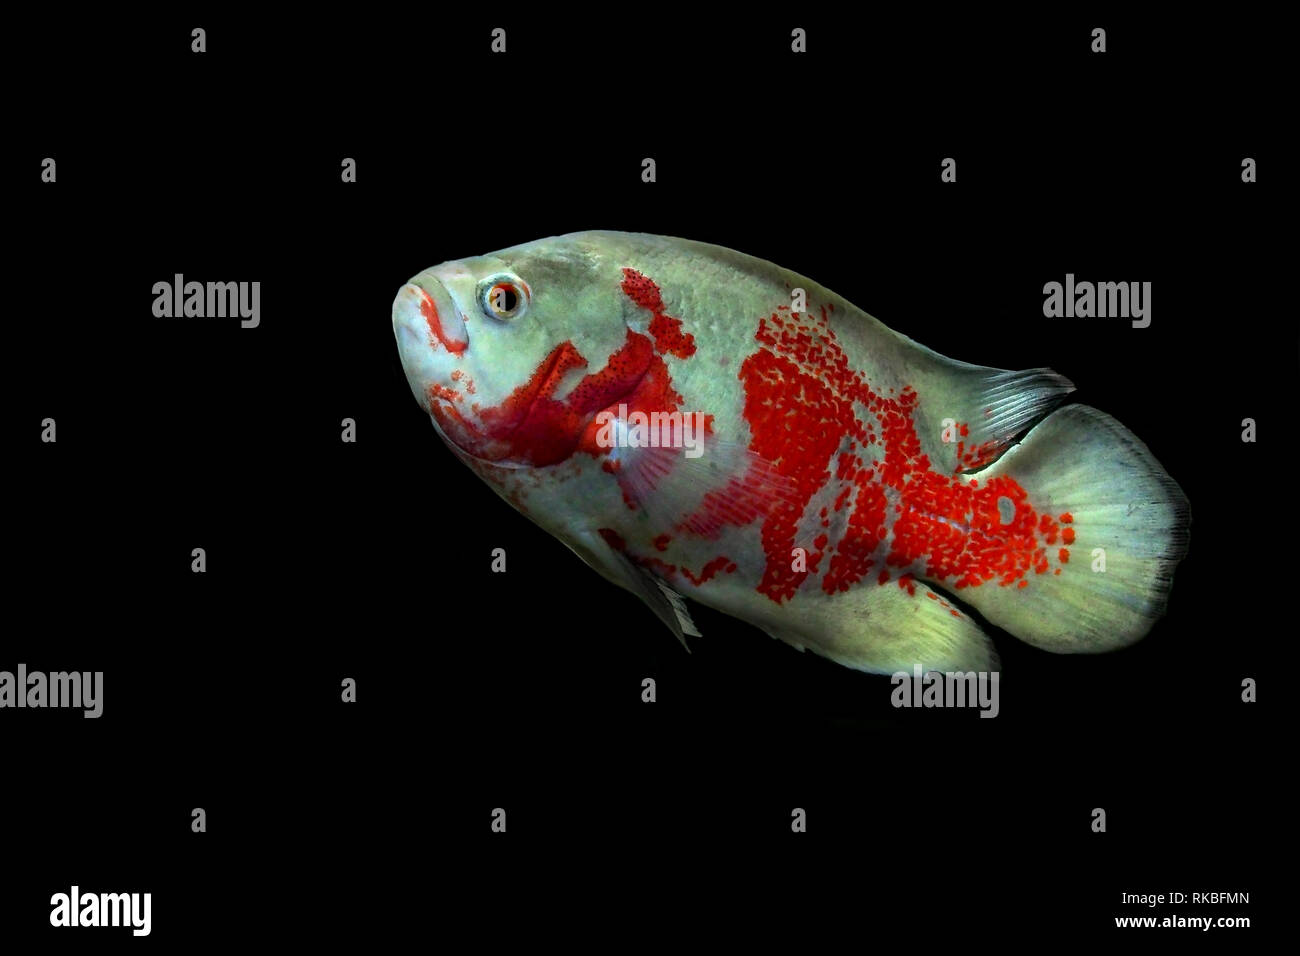 astronotus ocellatus or oscar fish isolated on black background Stock Photo